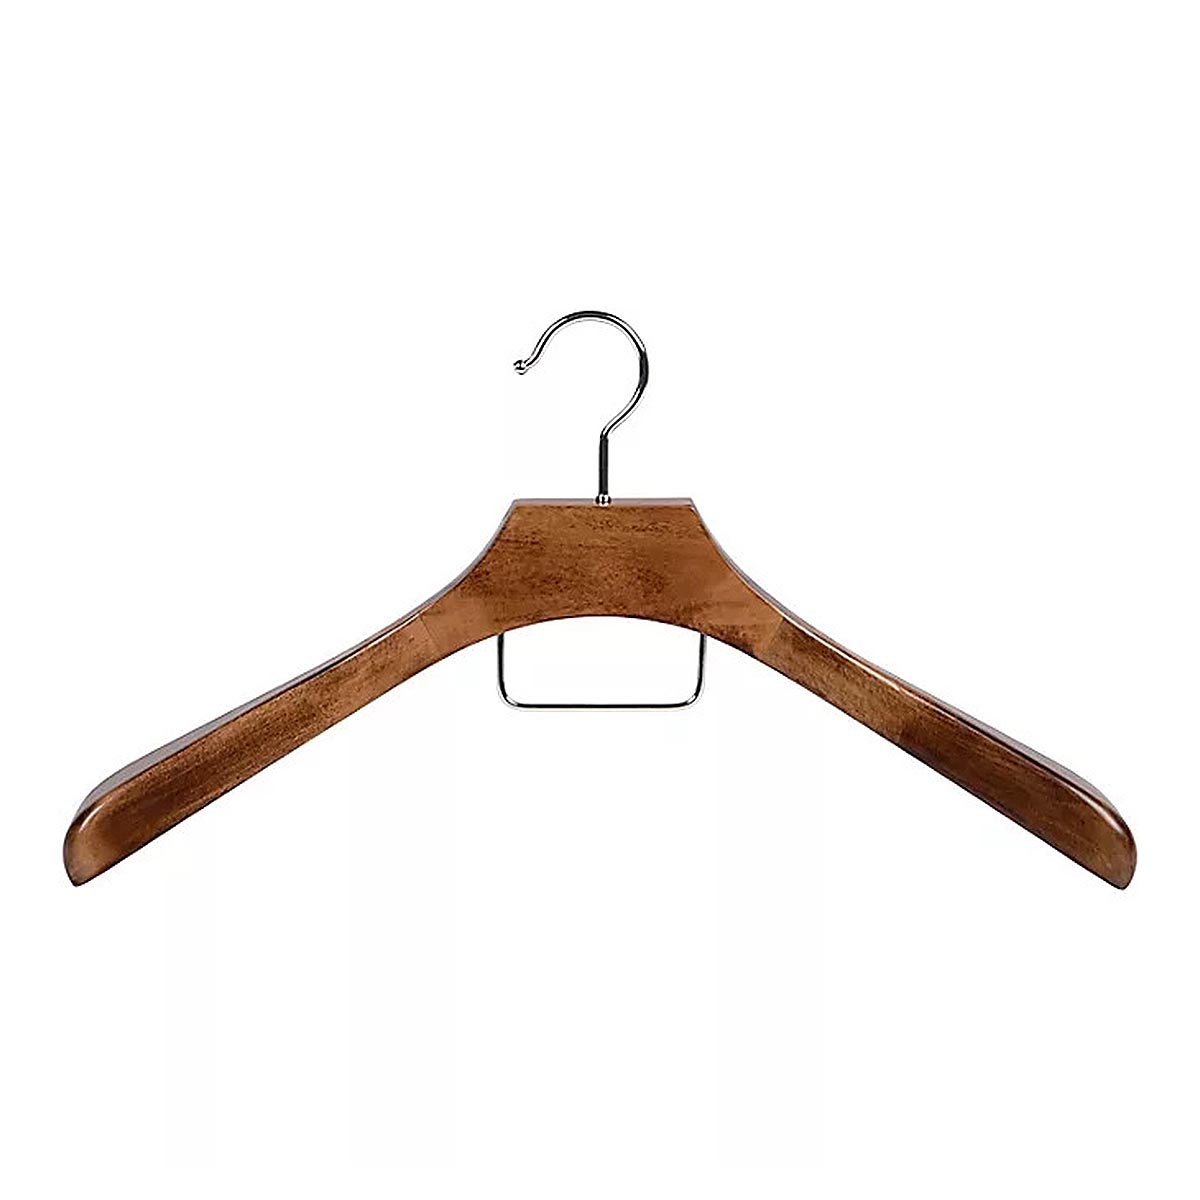 Dale Leisure - Wooden Coat Hanger